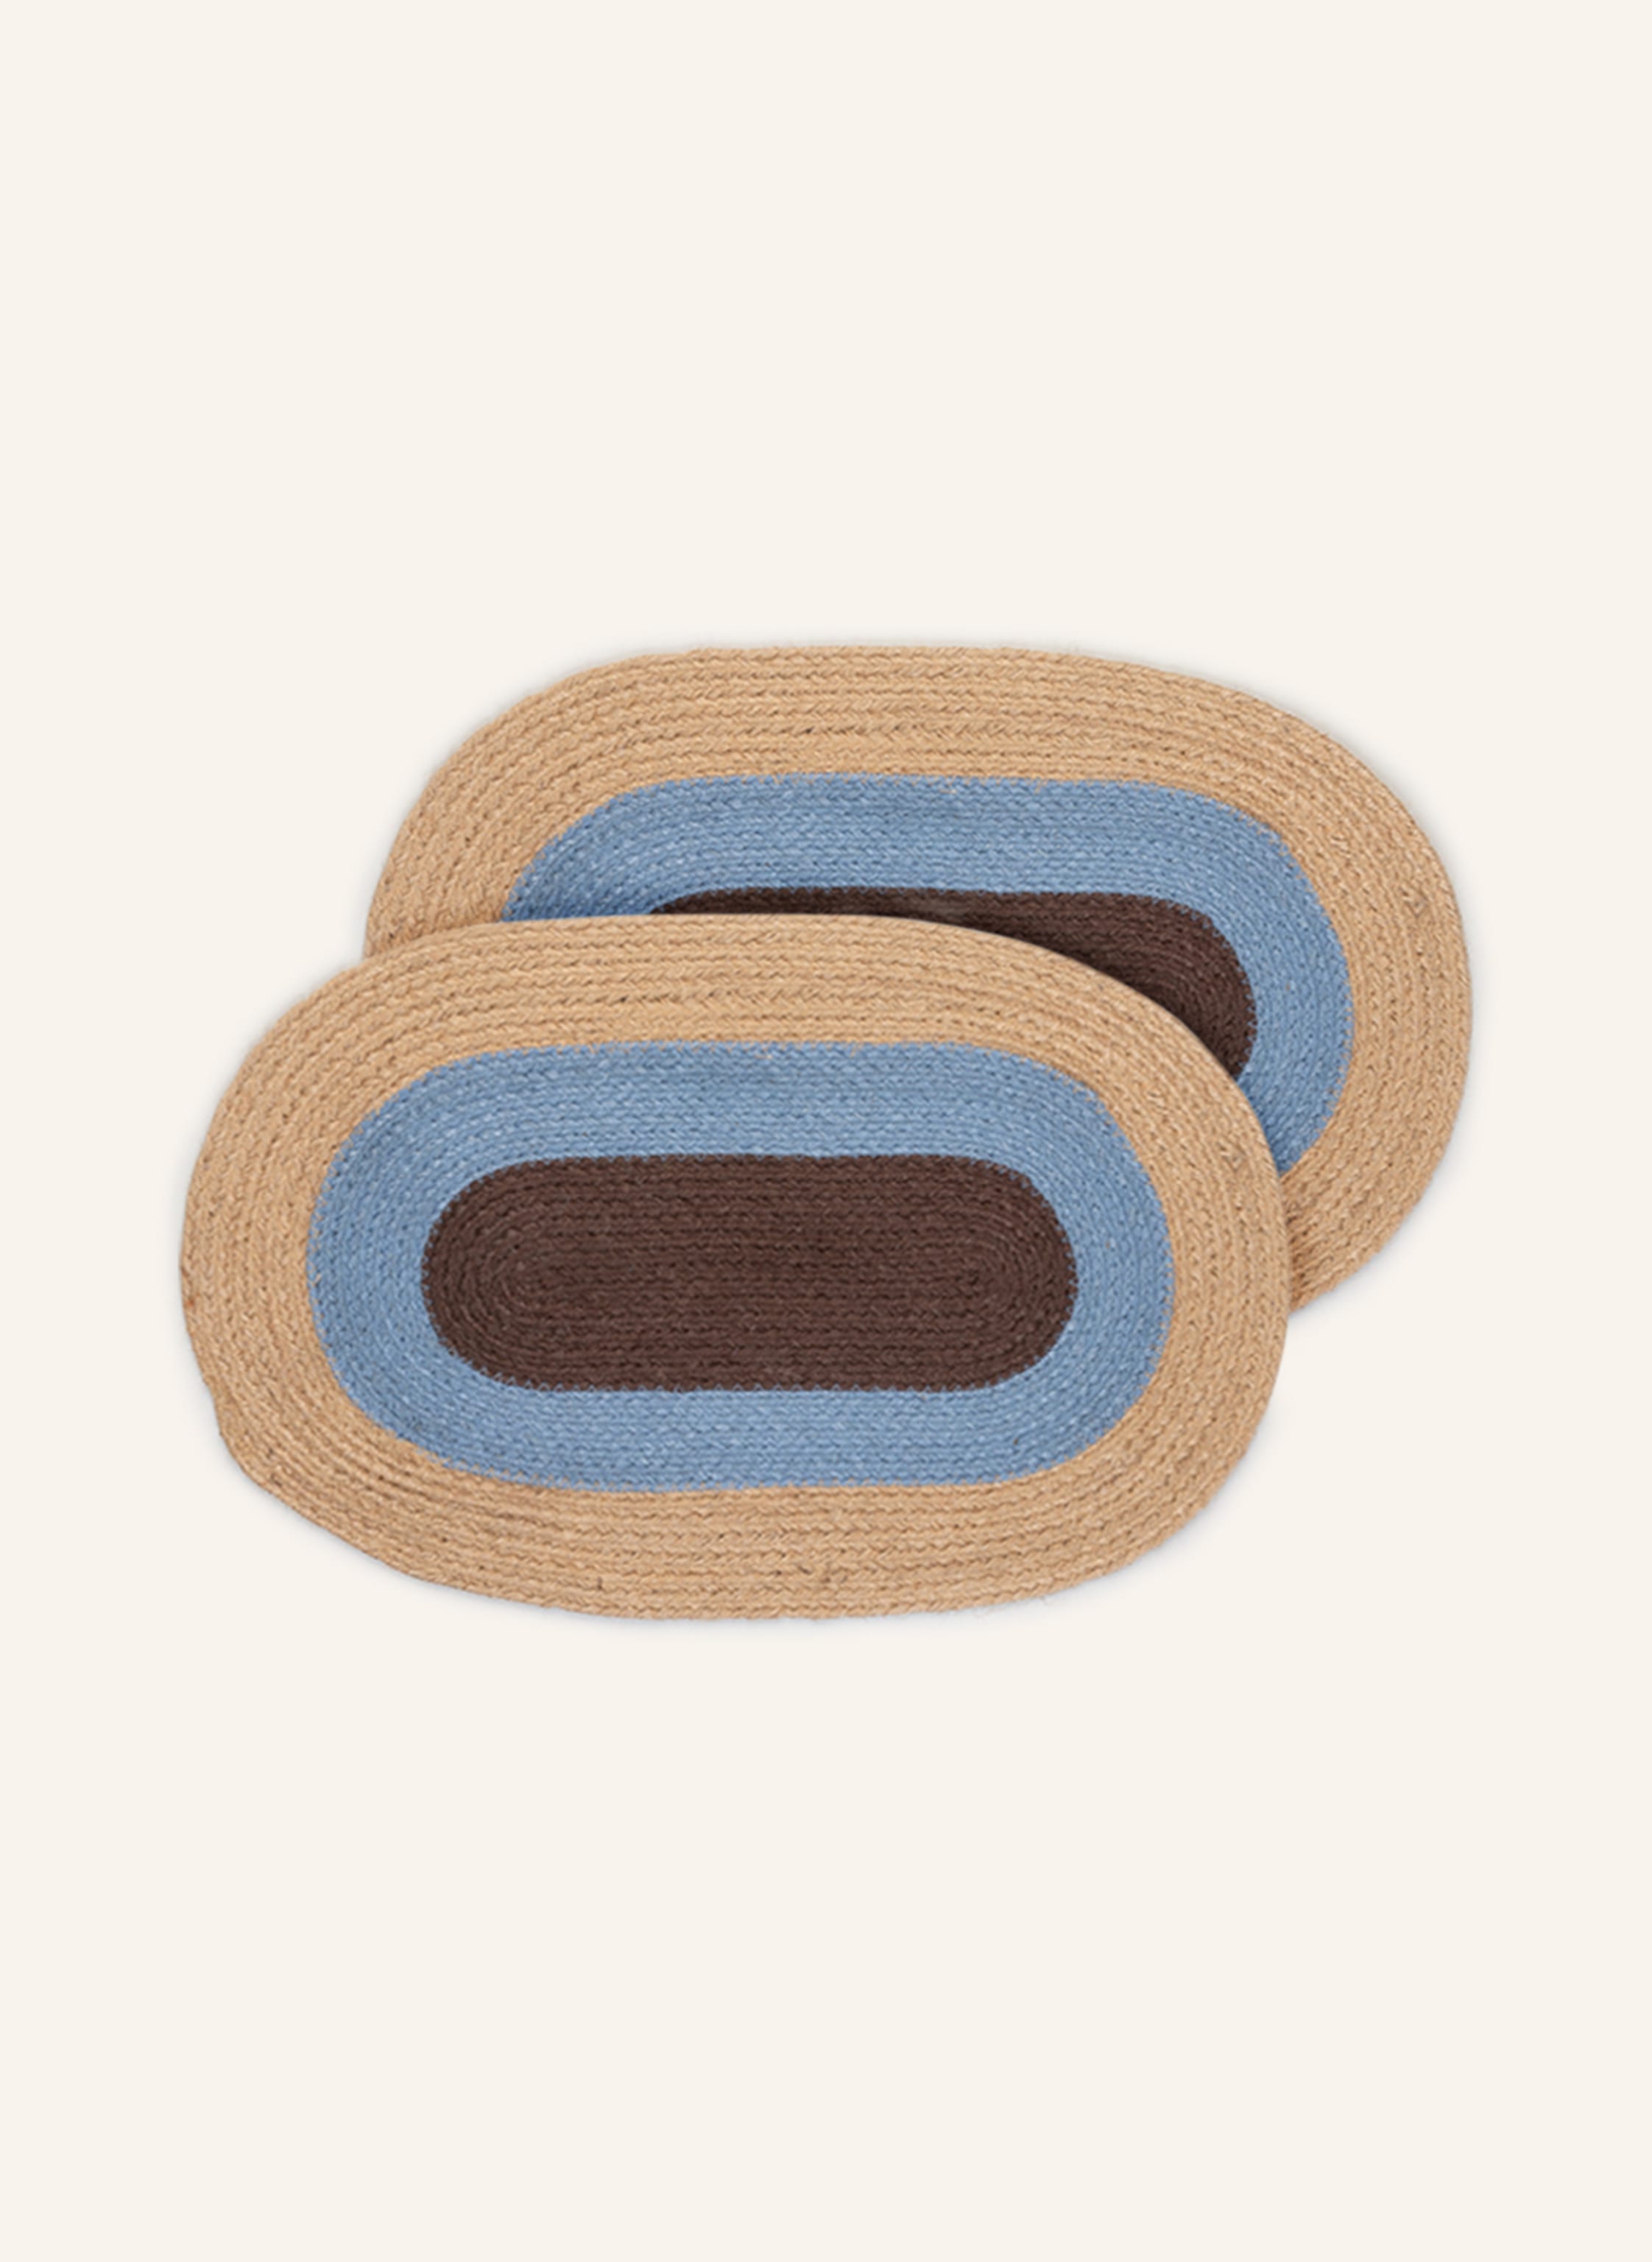 marimekko 2-piece placemat set MELOONI in beige/ light blue/ dark brown |  Breuninger